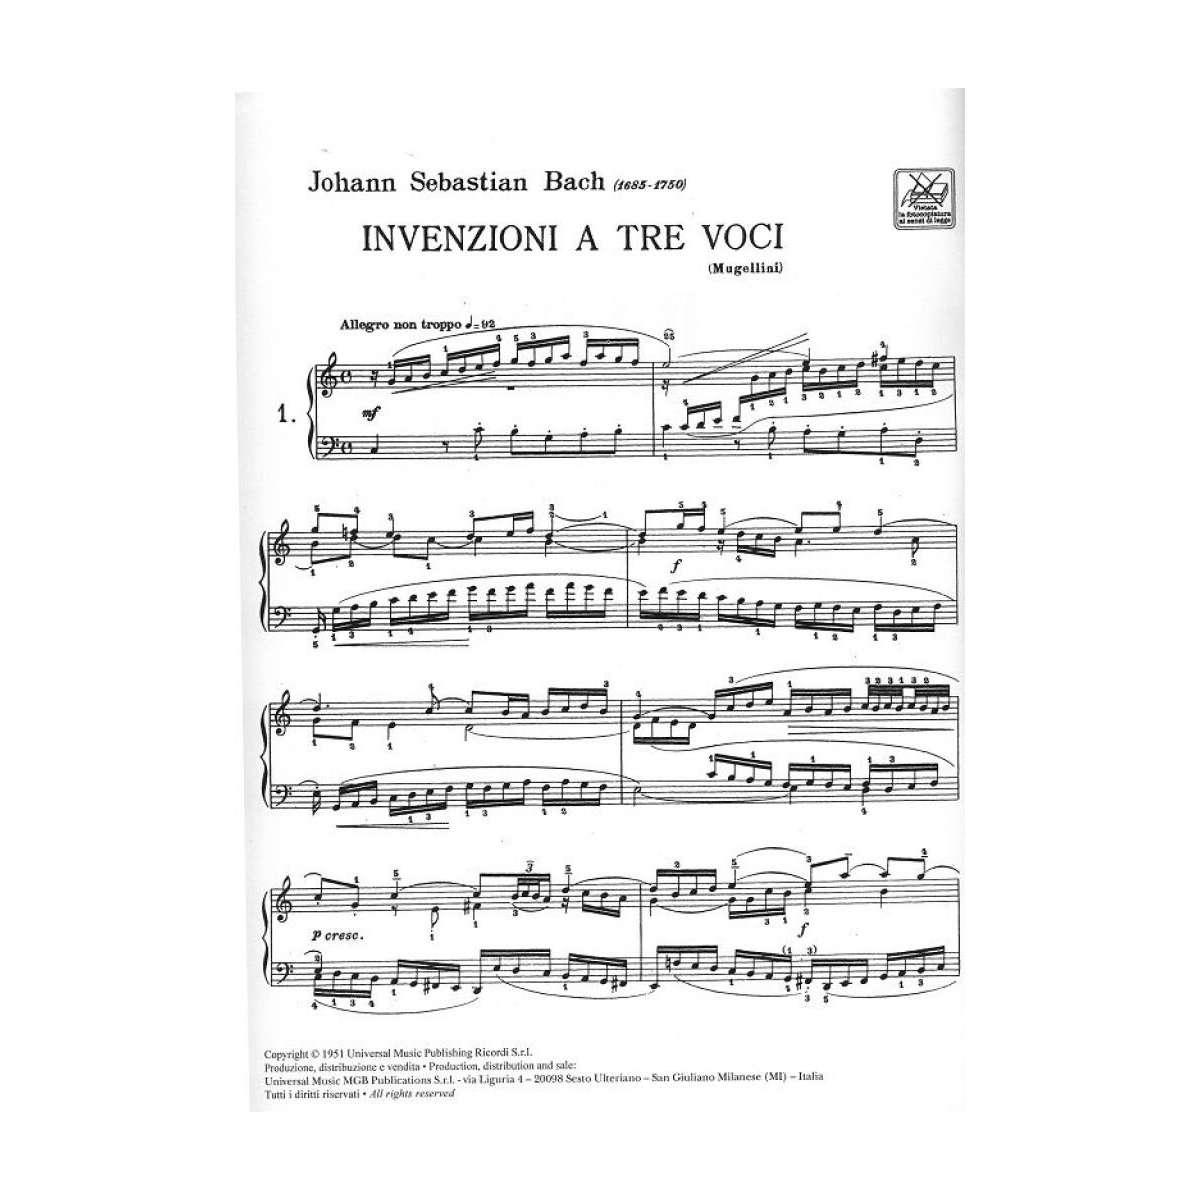 Bach invenzioni a 3 voci bach(mugellini)  11